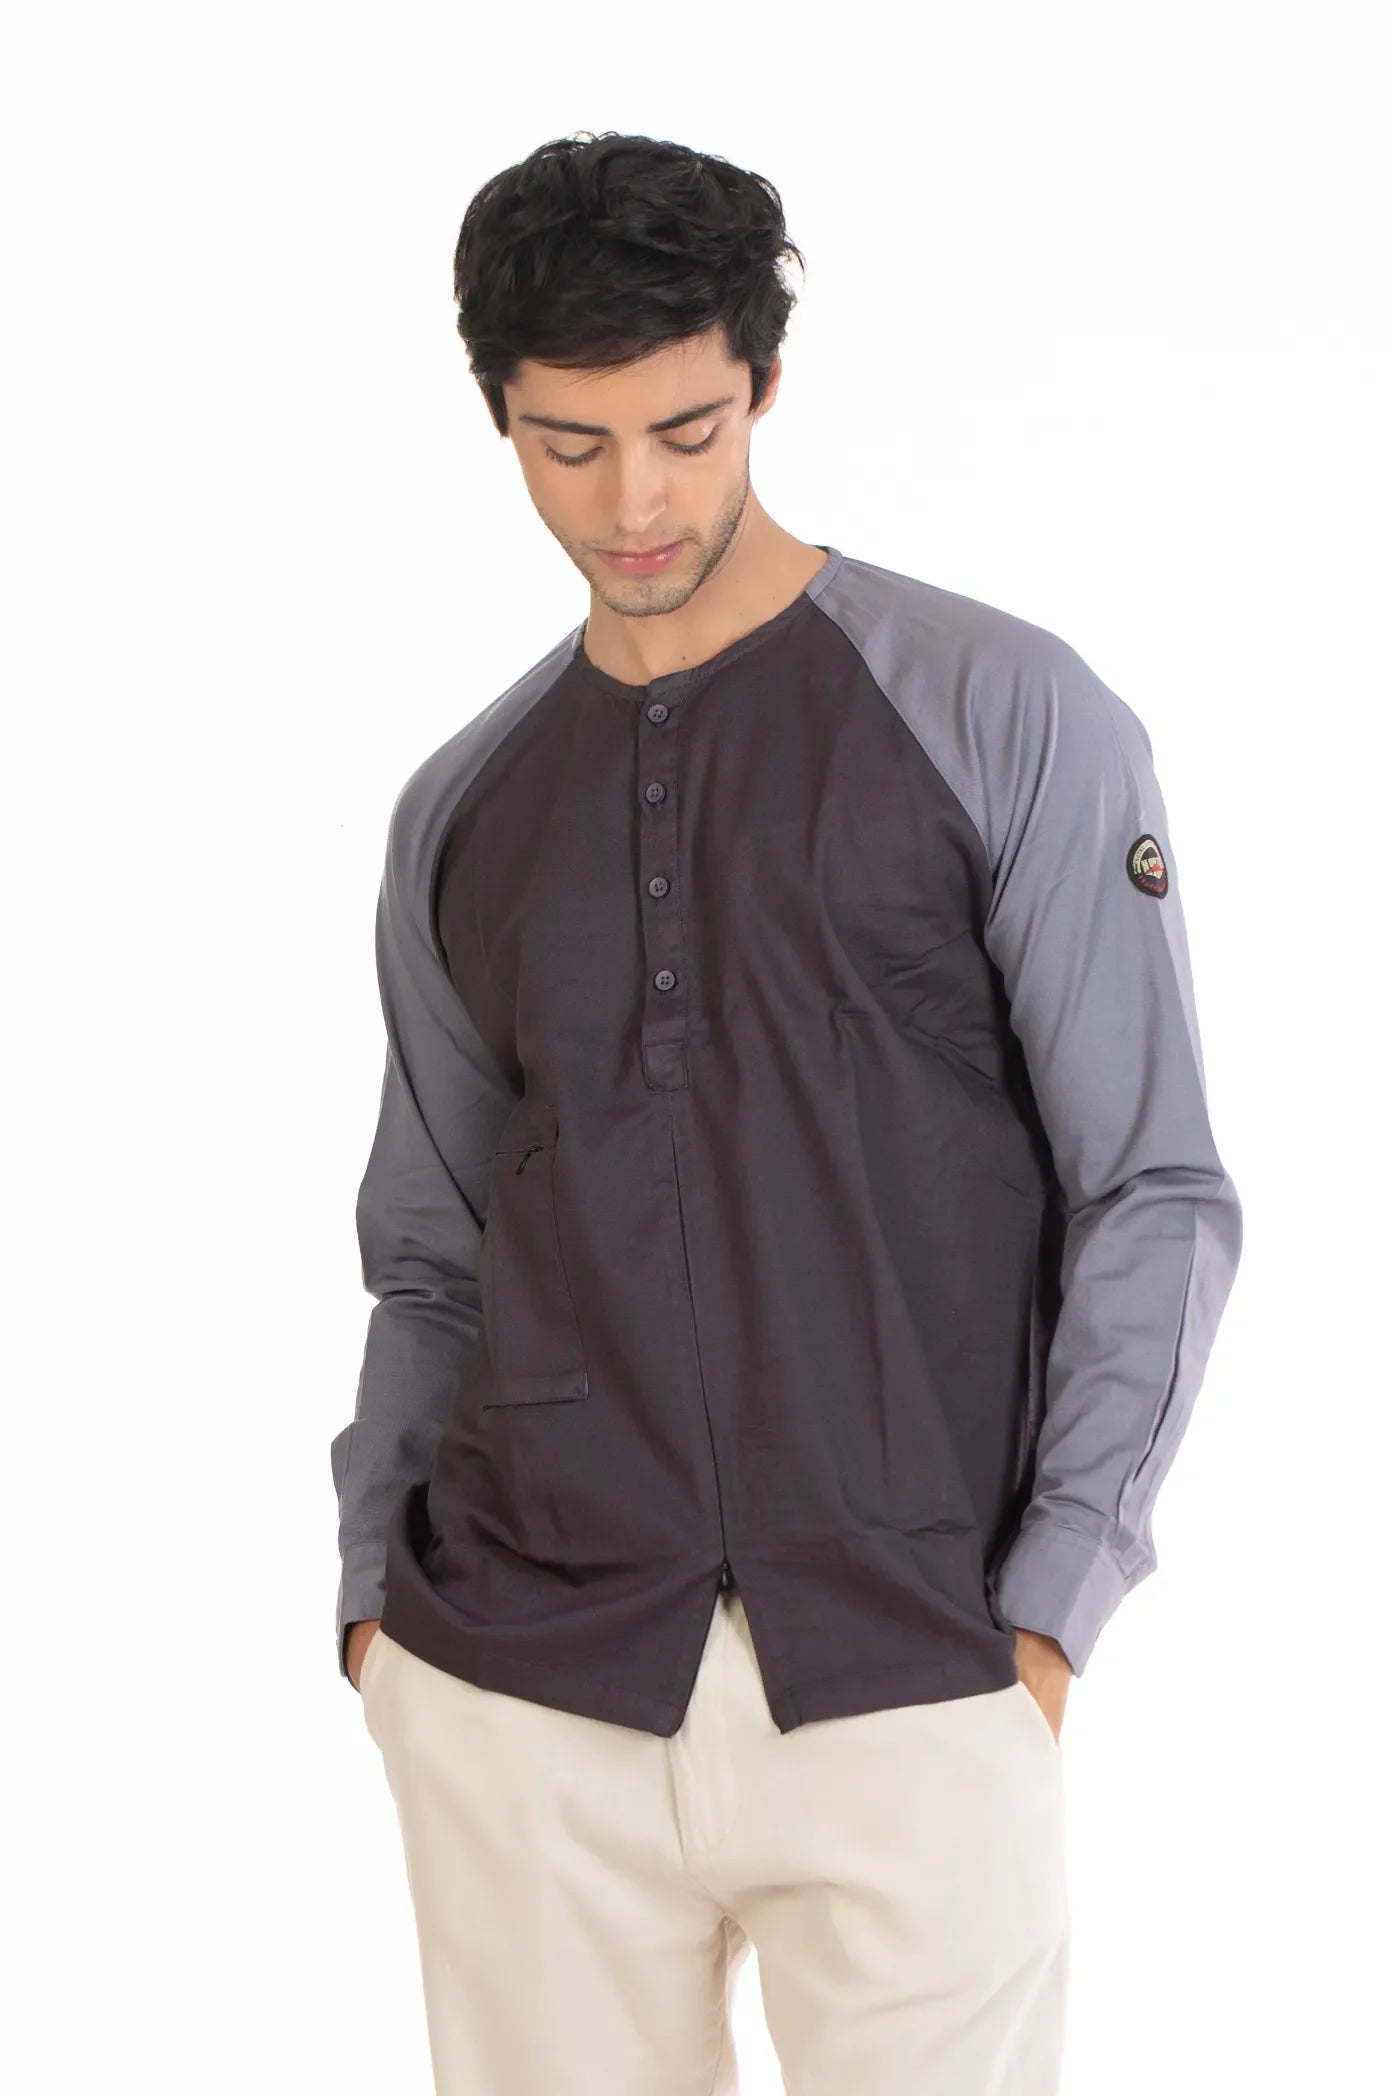 Buy Raglan Full Sleeve Shirt Online.